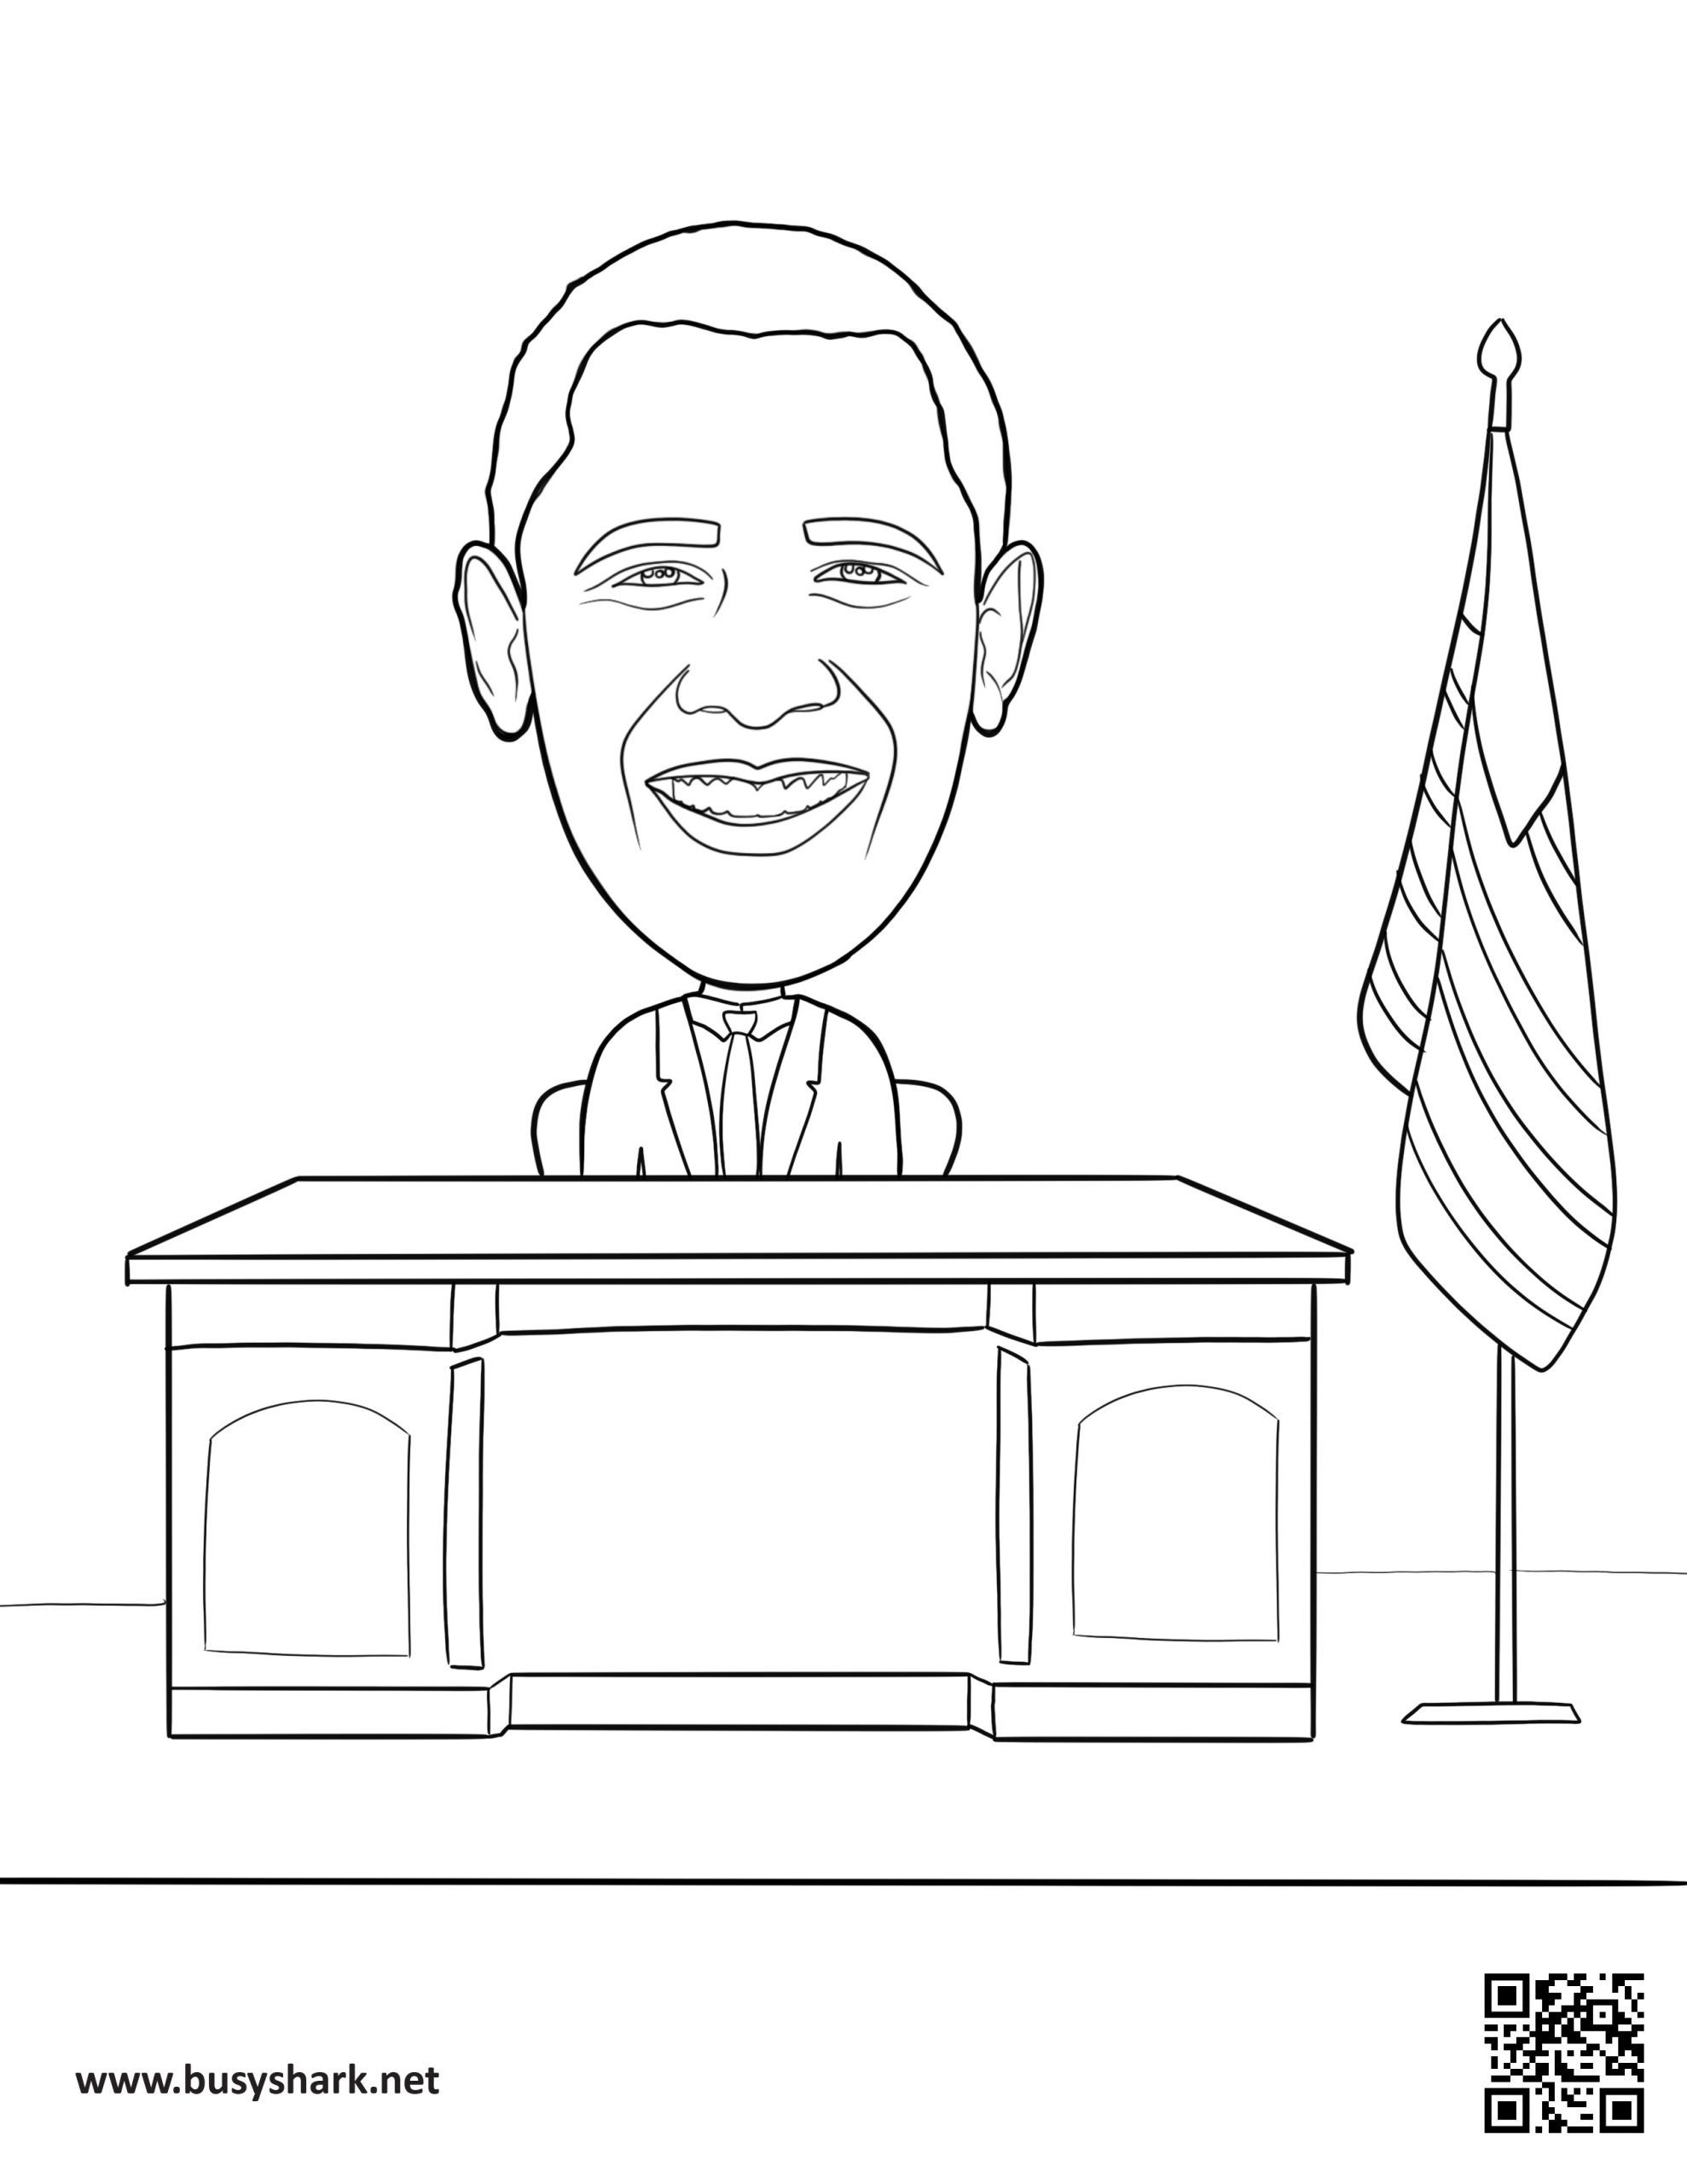 Barack obama coloring page free printable